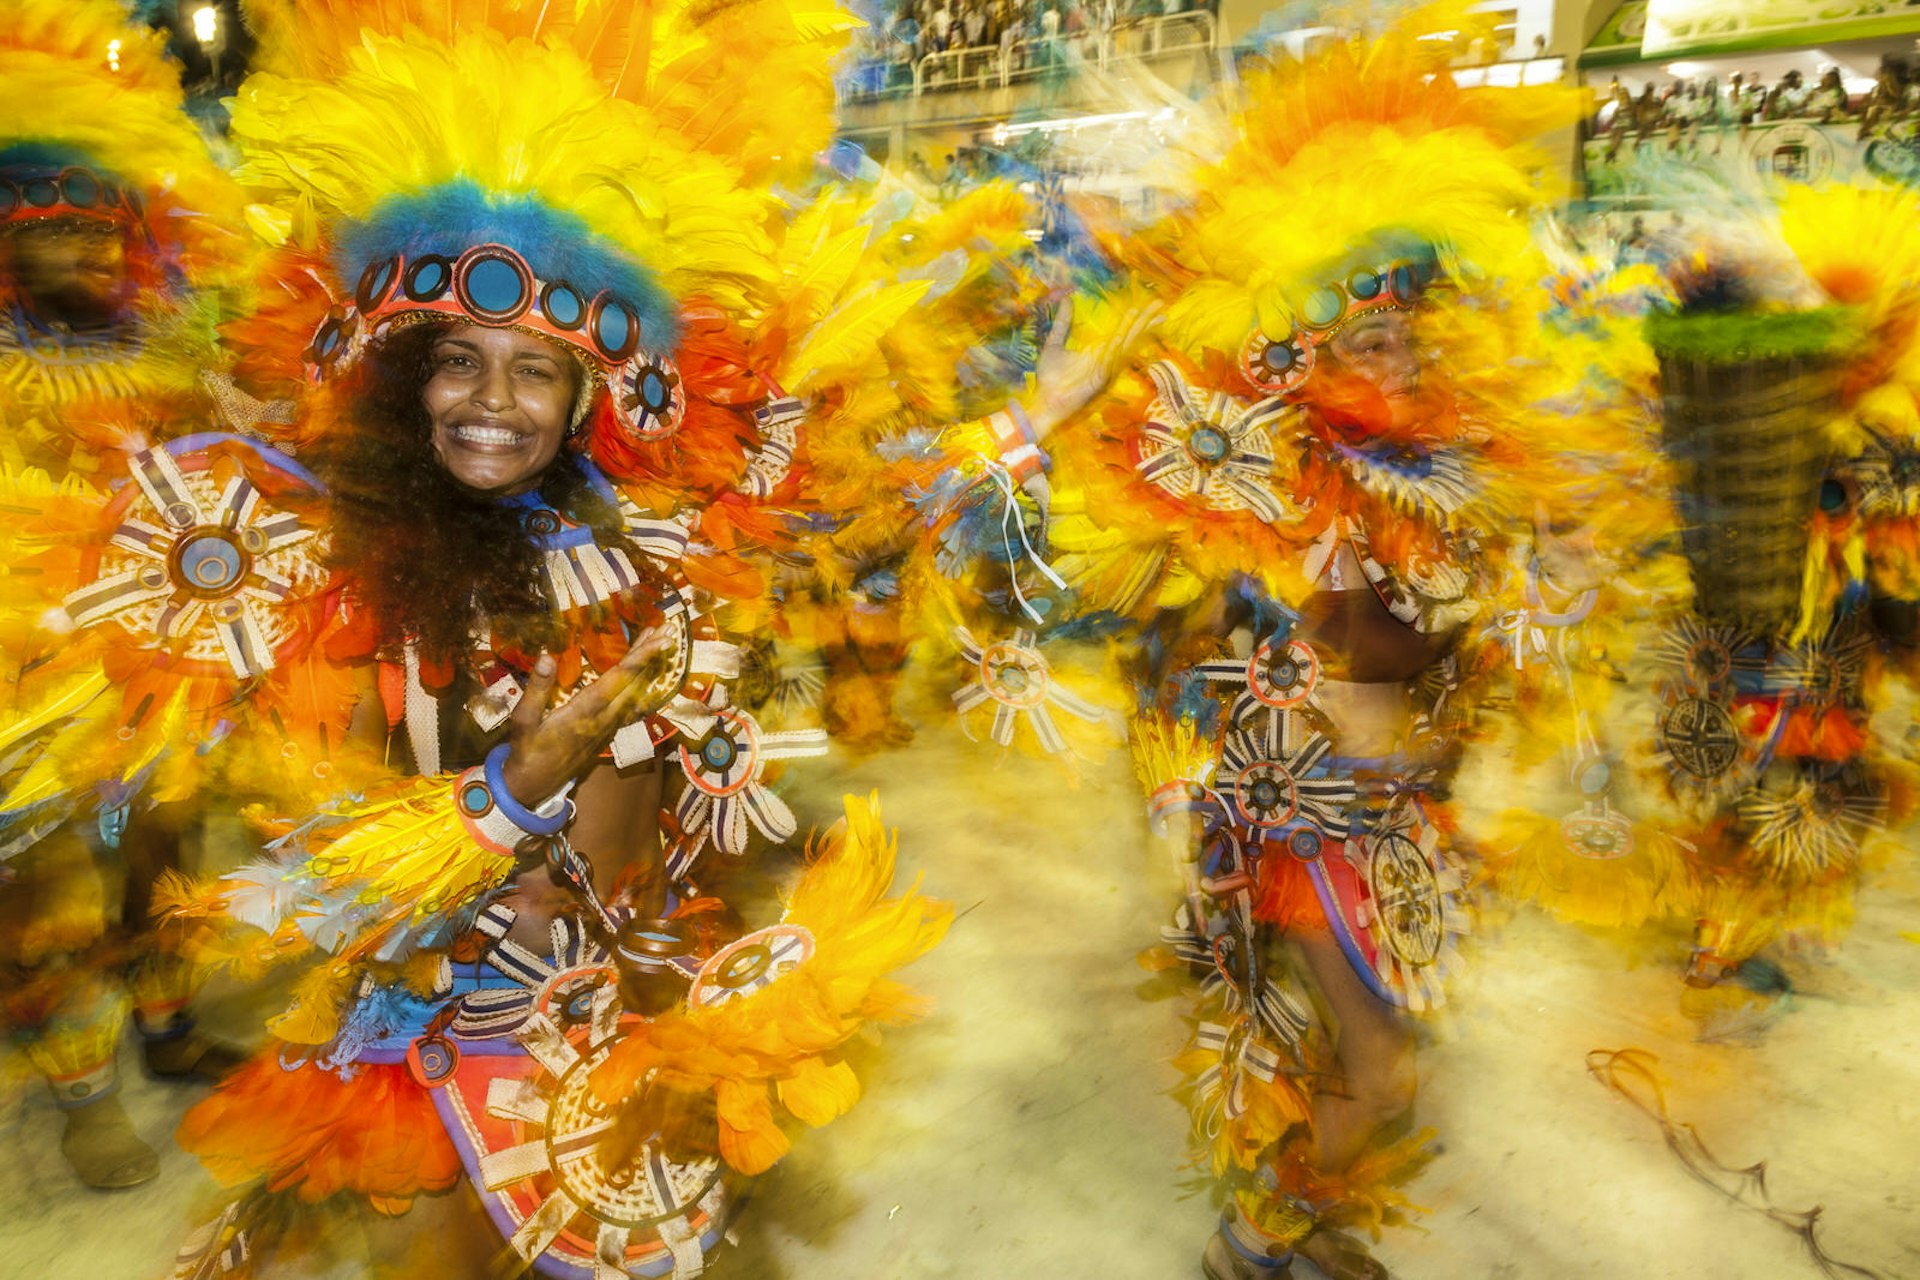 Carnival performers in Rio de Janeiro, Brazil